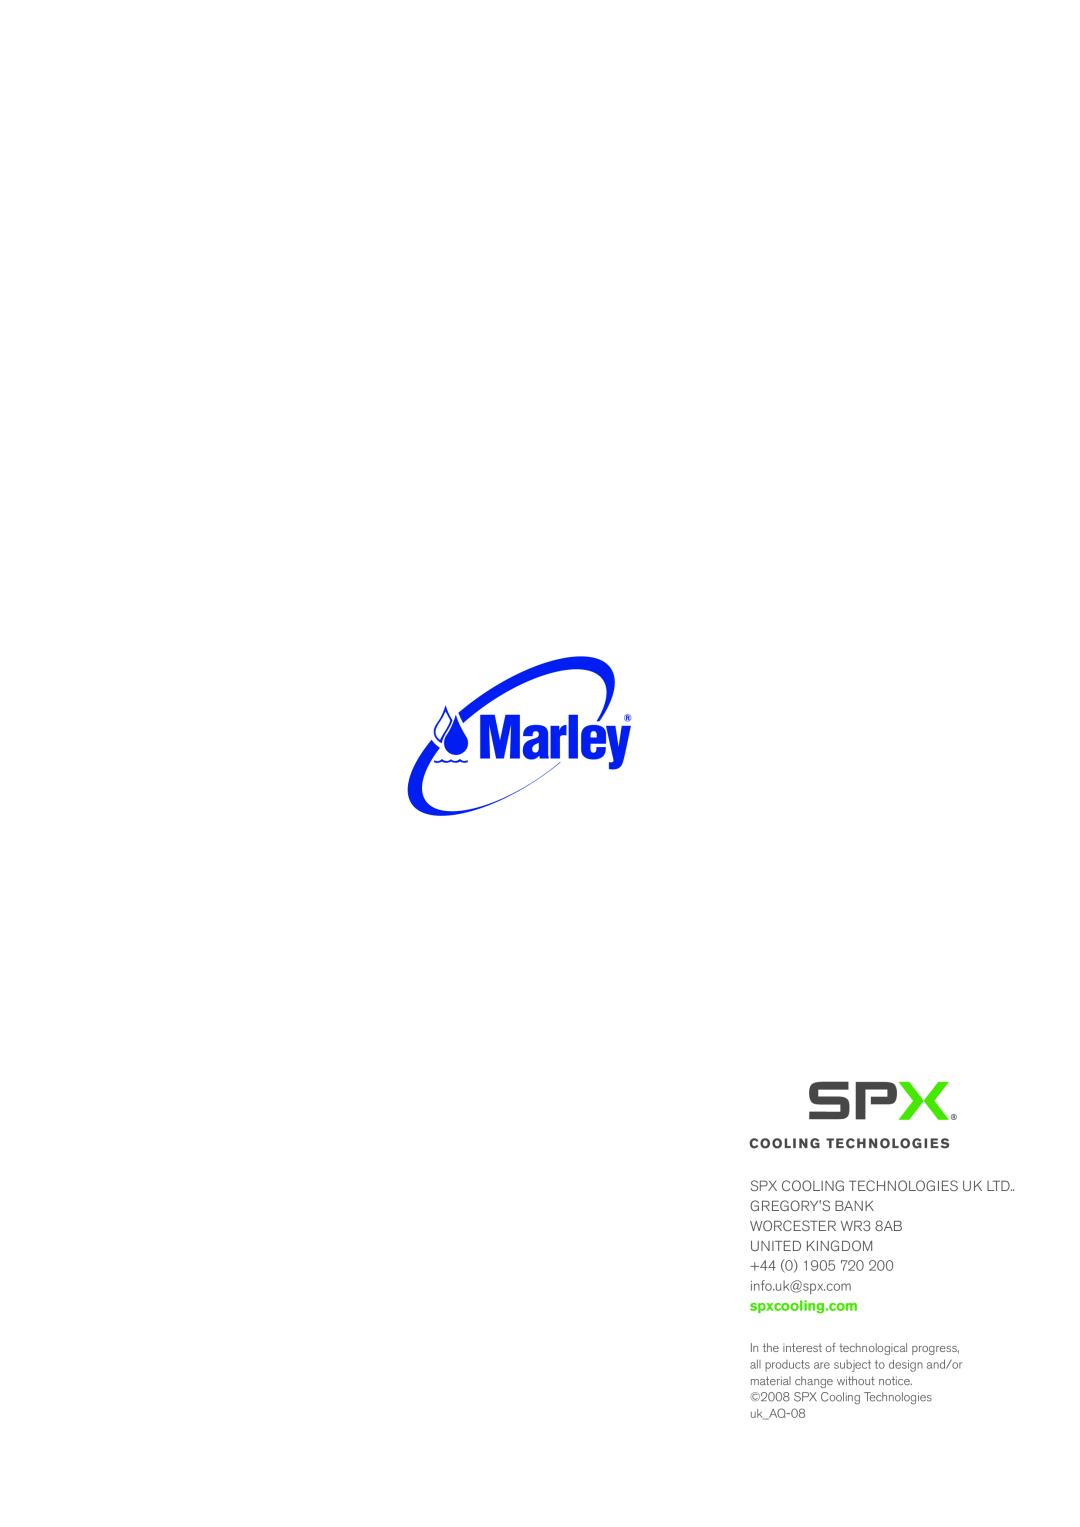 SPX Cooling Technologies Marley Aquatower manual Spx Cooling Technologies Uk Ltd.. Gregorys Bank 